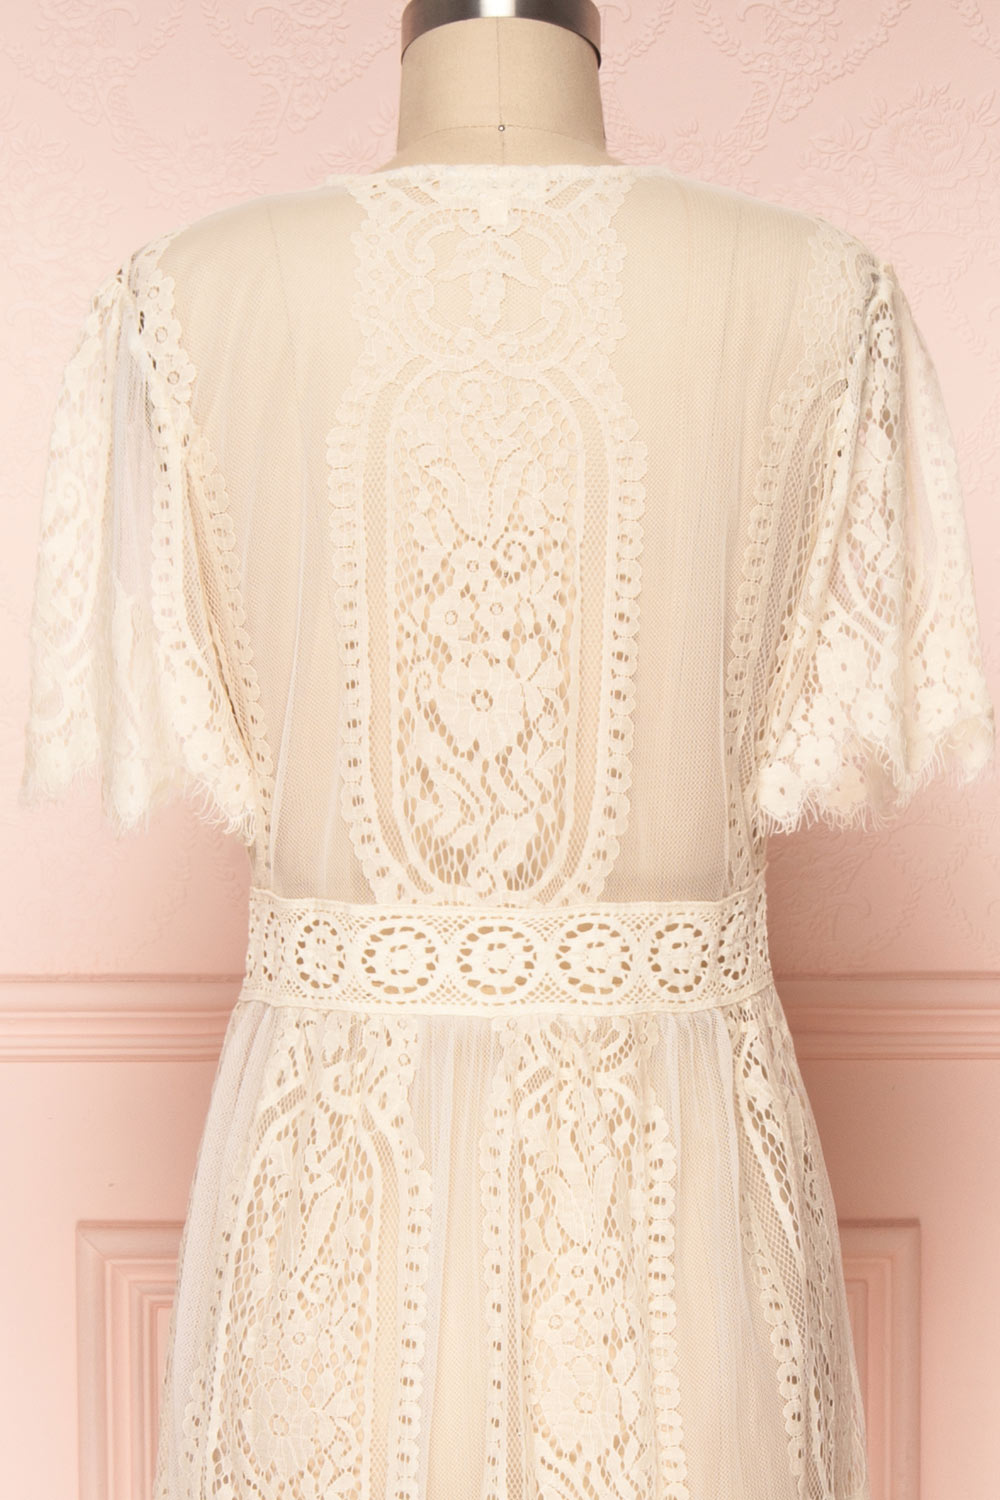 Virrey Beige Ivory Lace Long Kimono | Boutique 1861 6